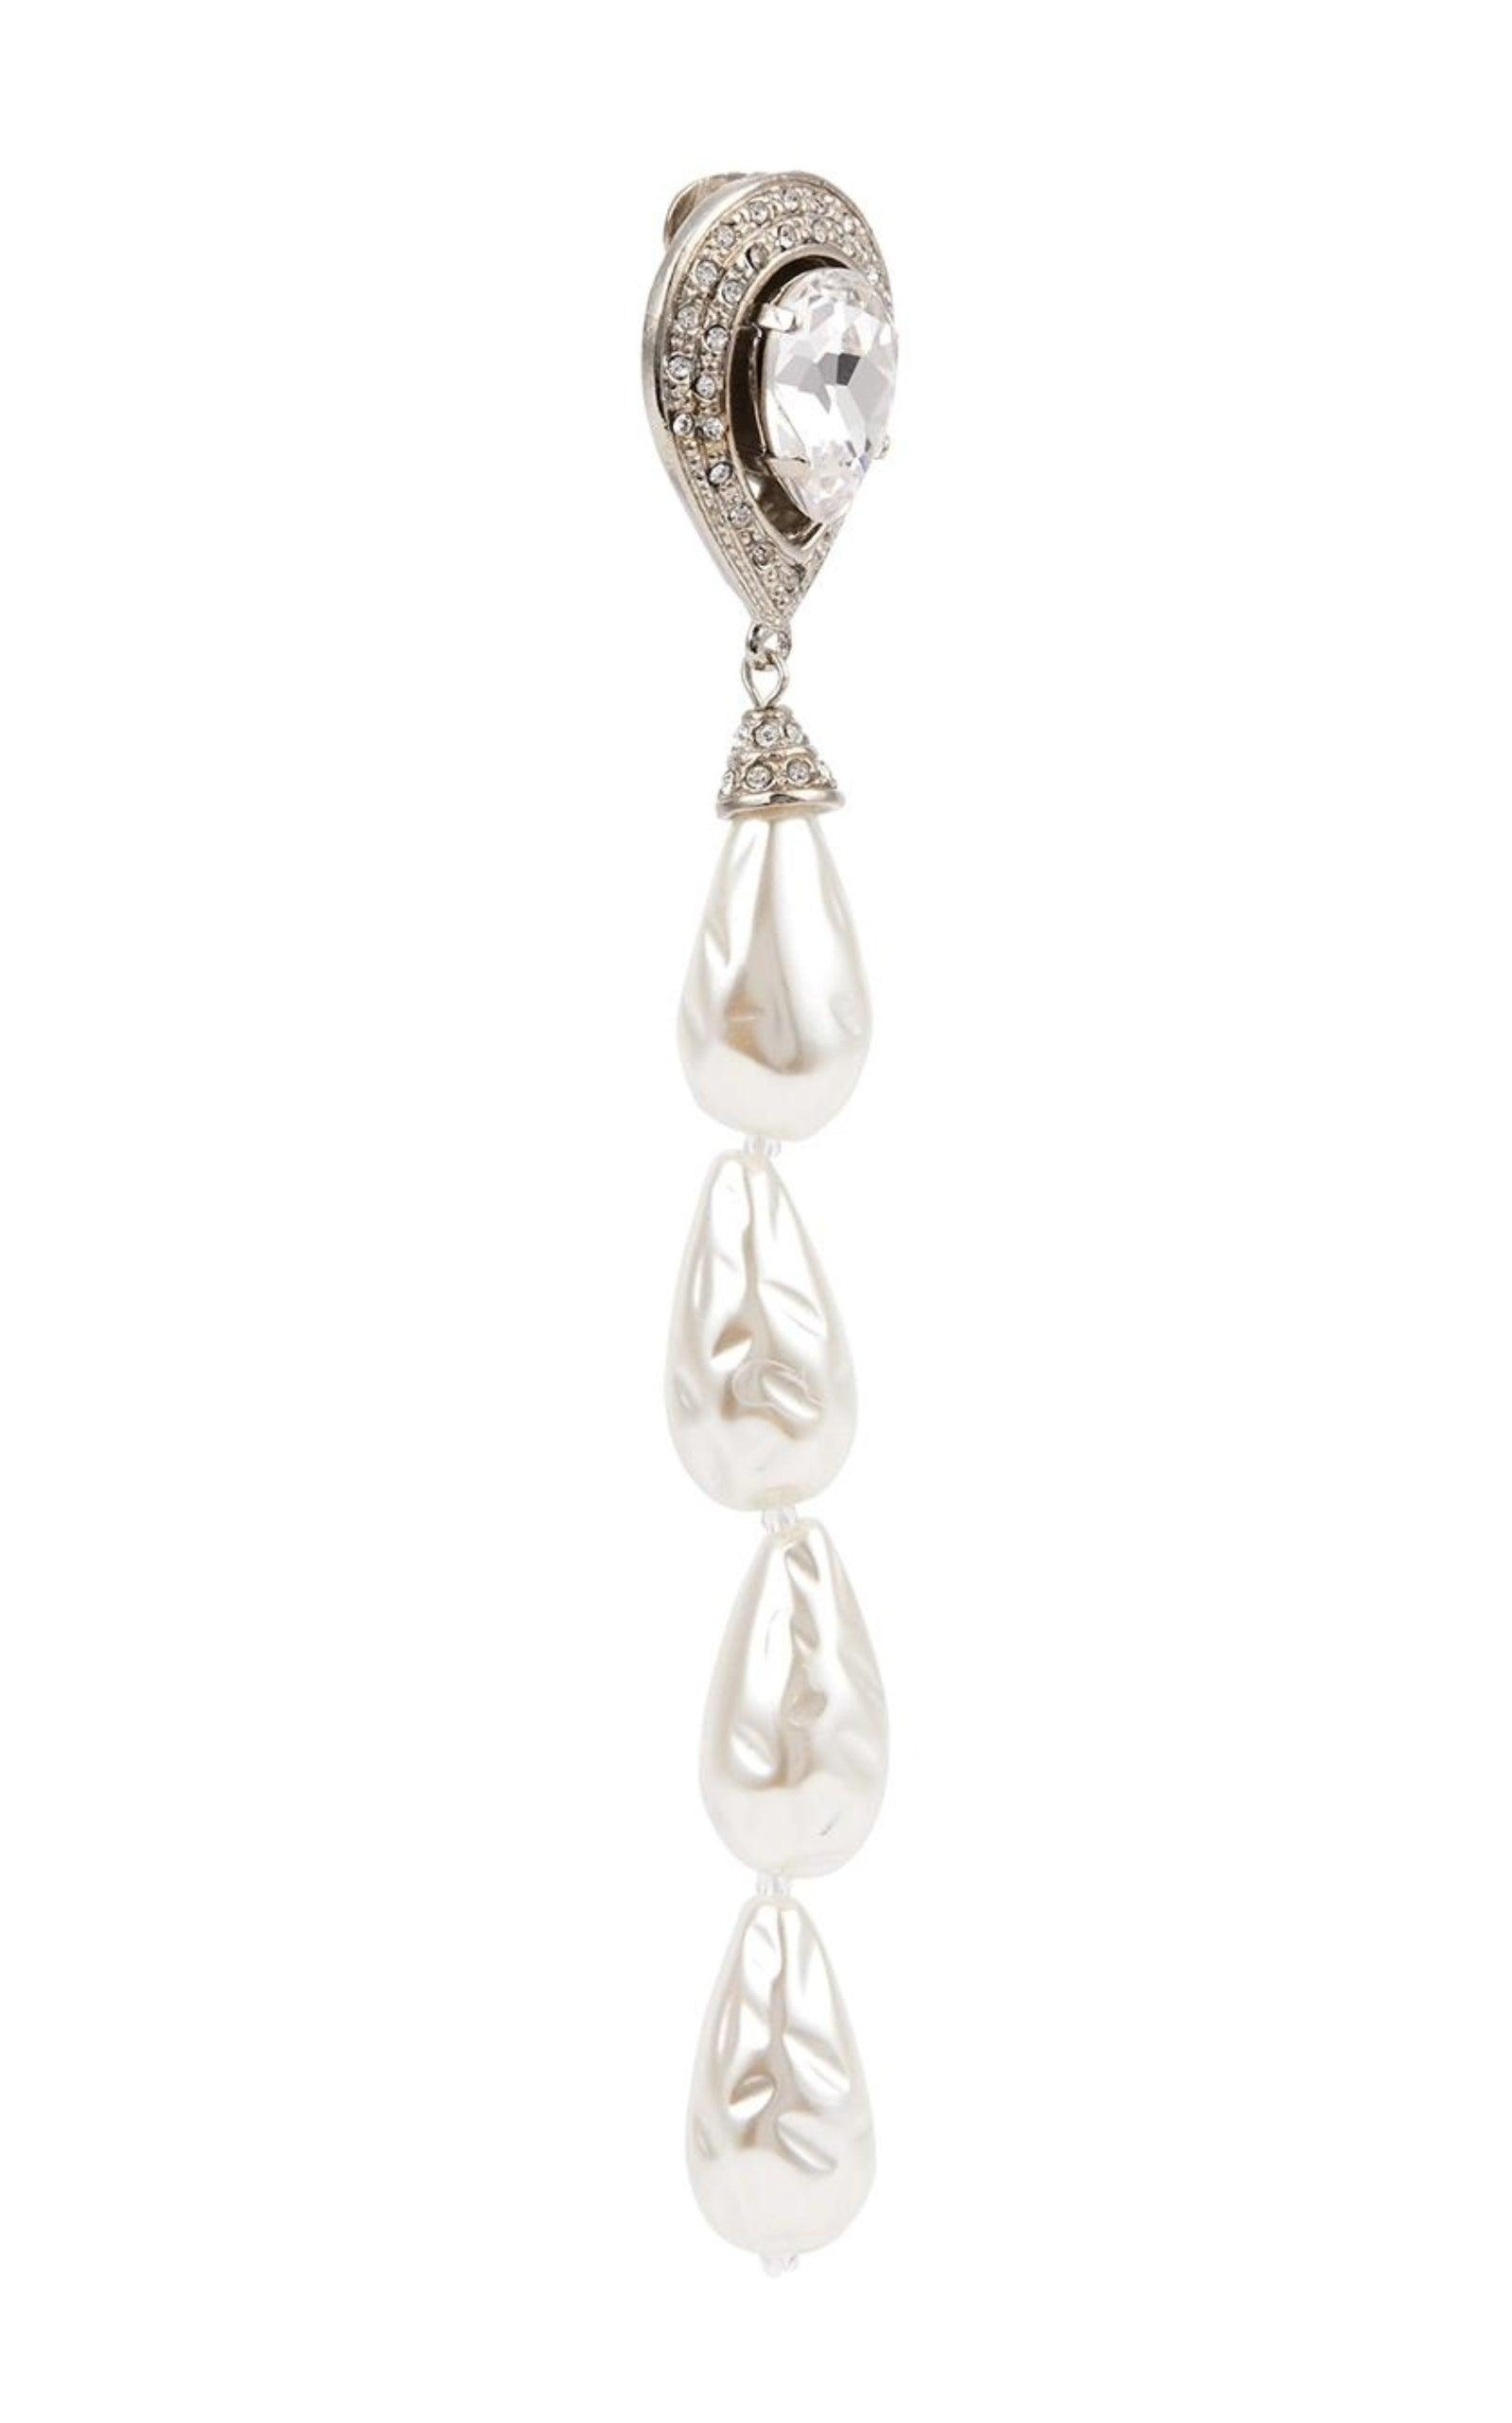  Alessandra RichCrystal-embellished Pearl Clip-on Earrings - Runway Catalog